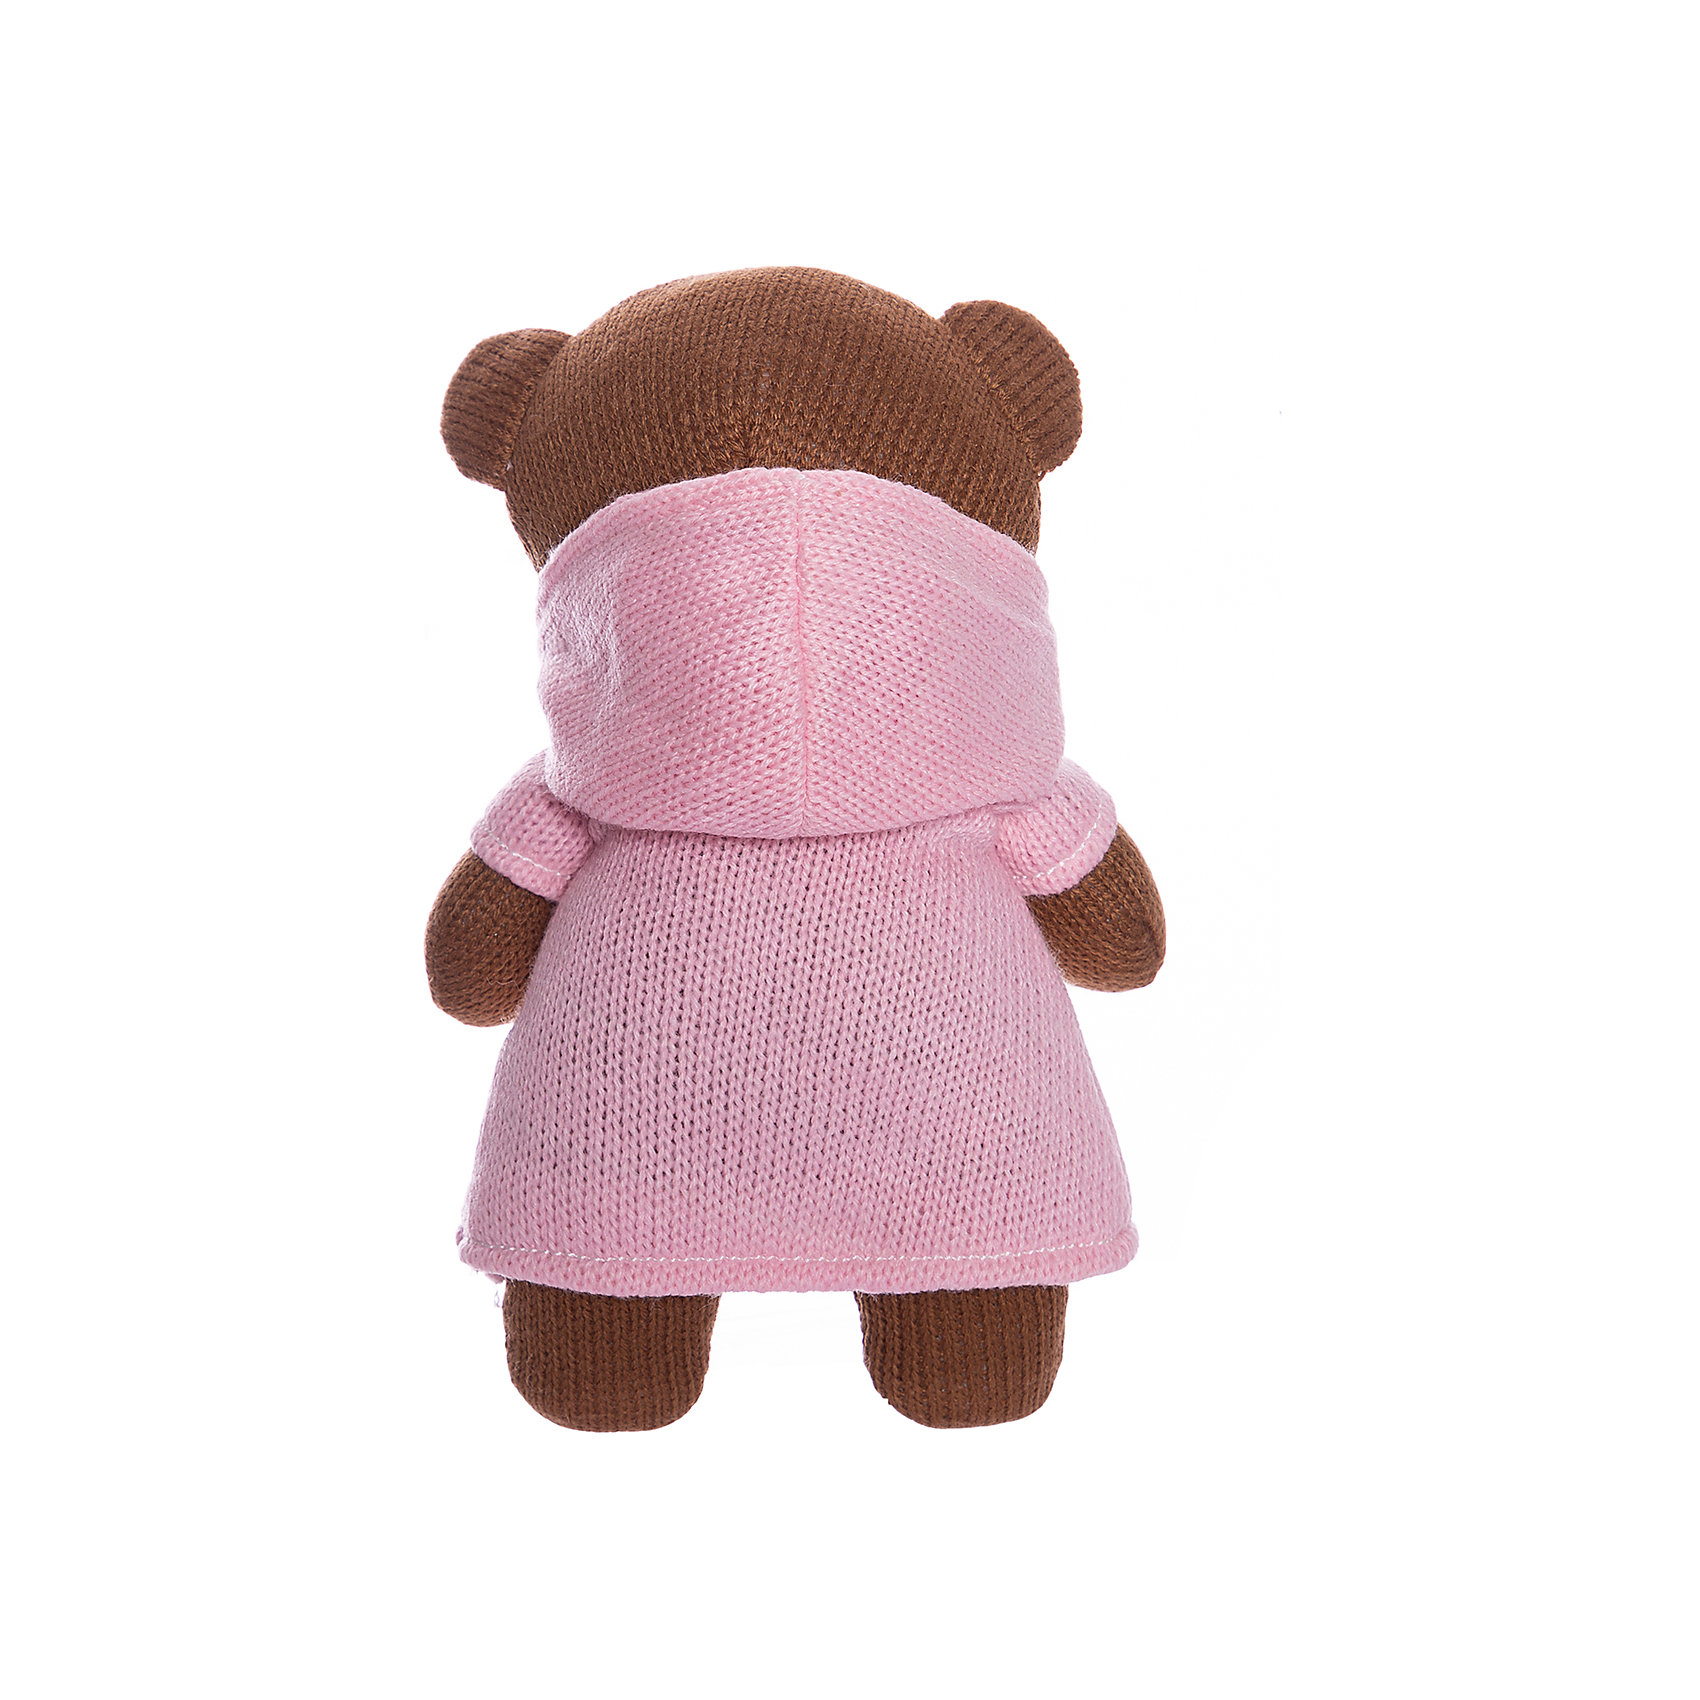 Вязаная игрушка Knitted Мишка, 22 см ABtoys 16690222